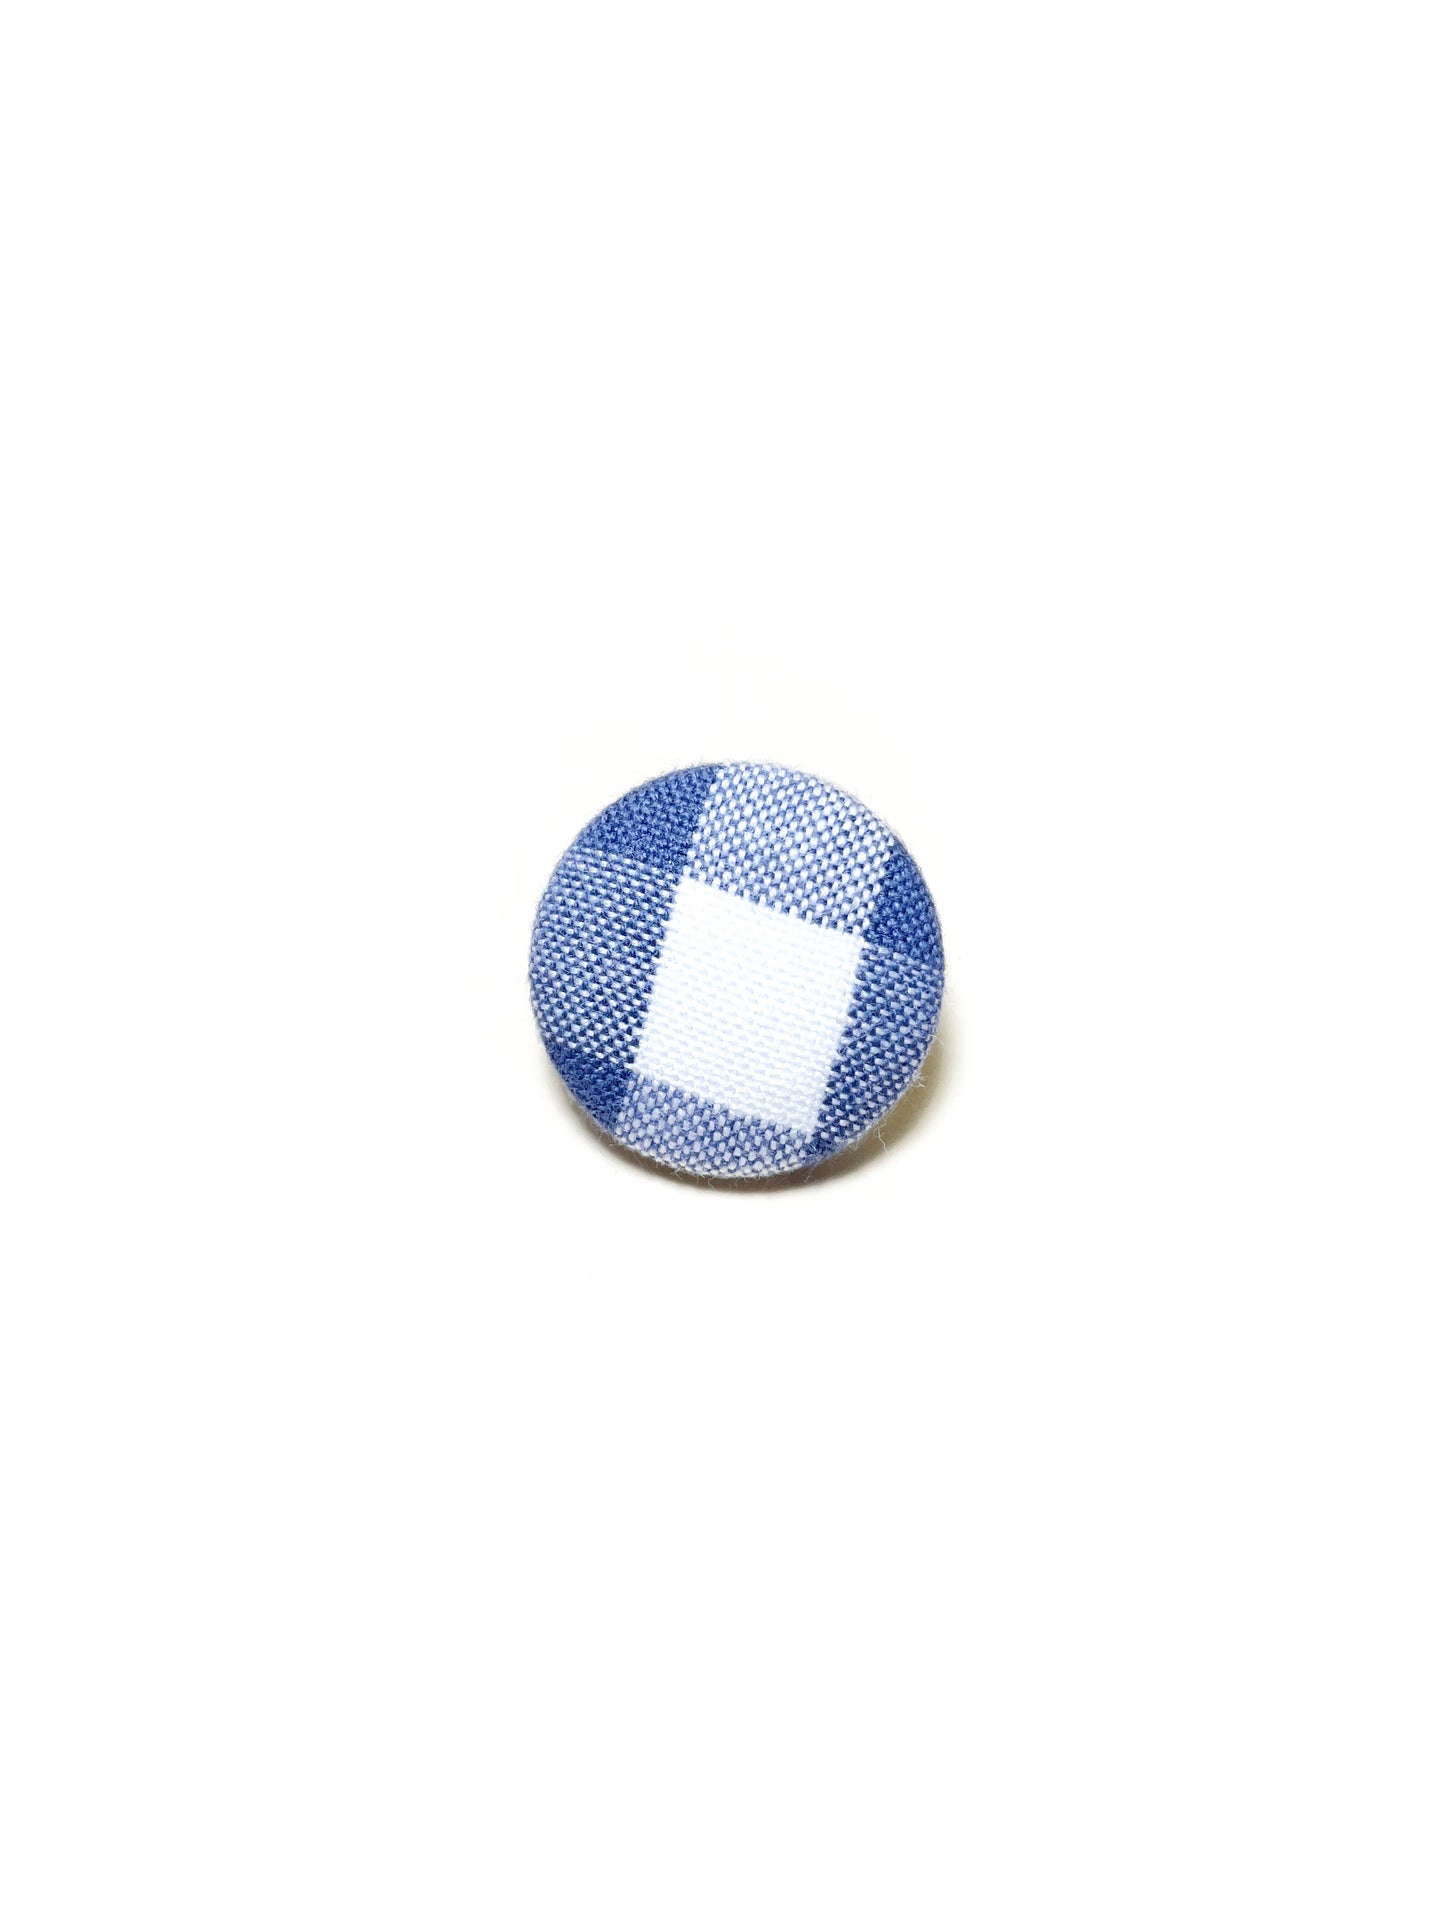 Handmade slate blue gingham plaid fabric covered lapel pin.